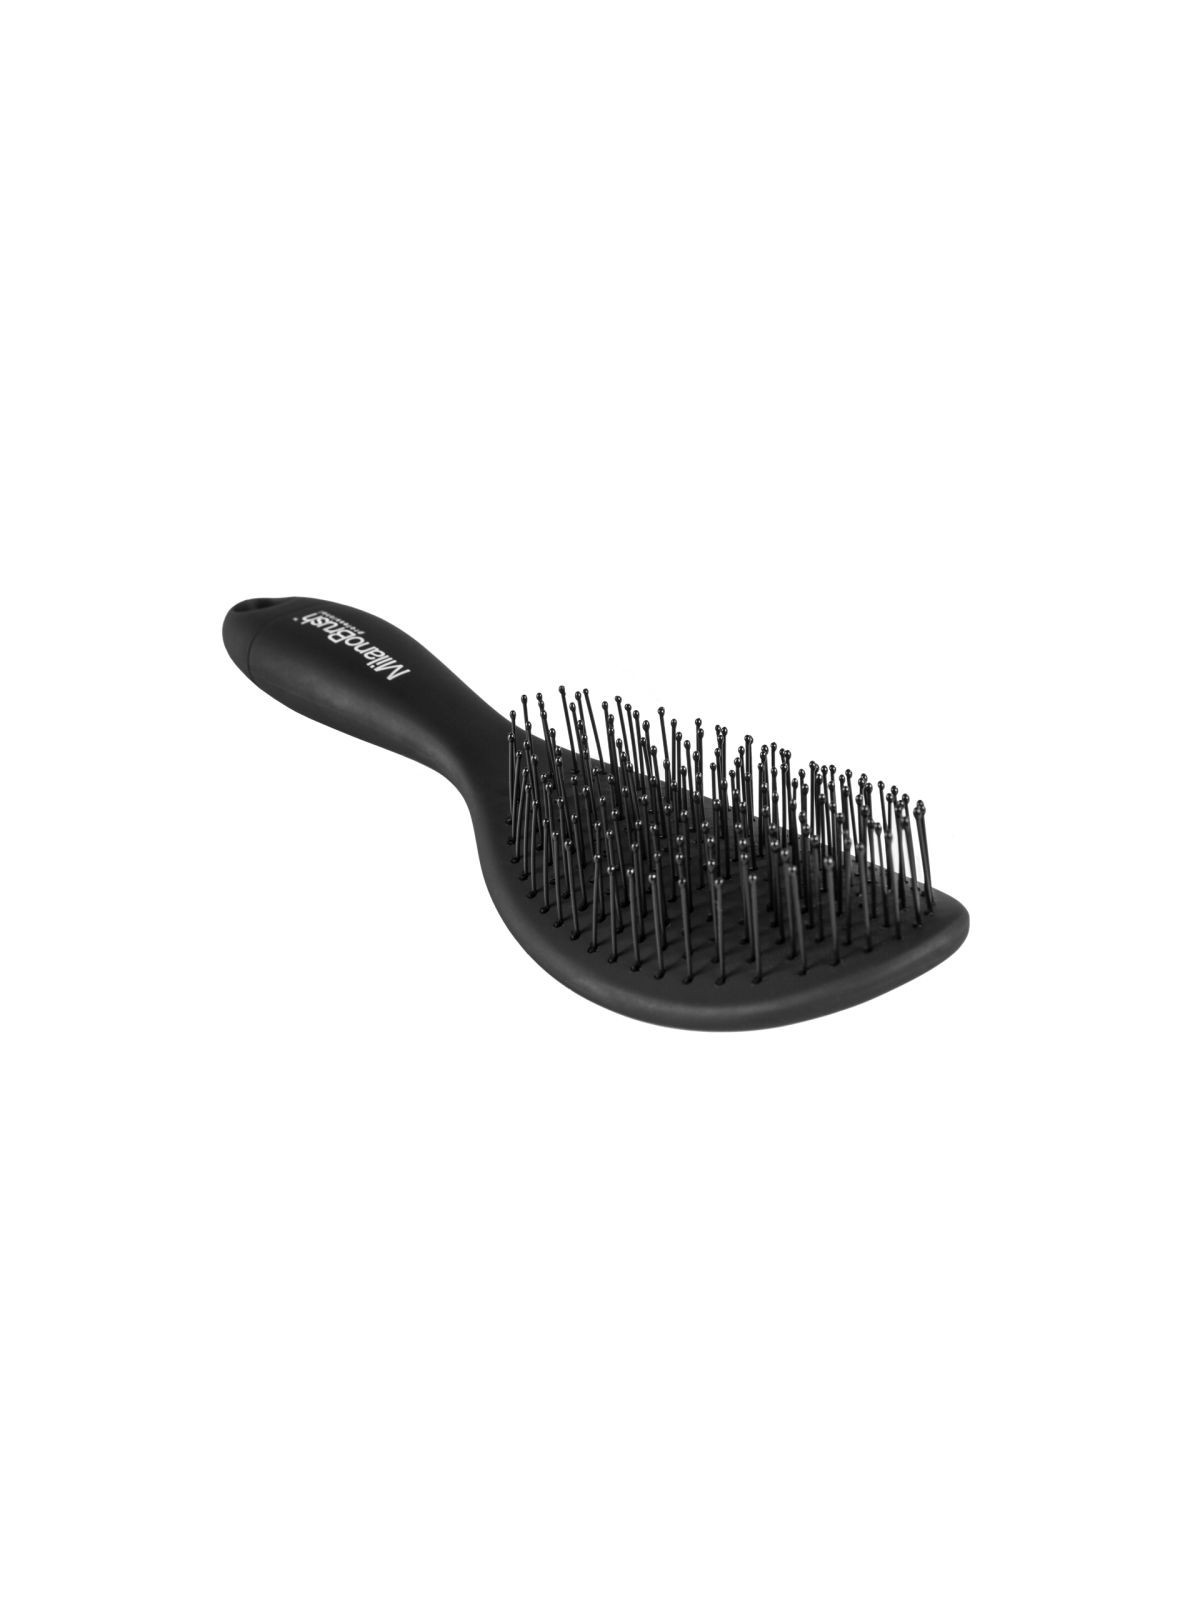 Plaukų šepetys MilanoBrush Laurel detangling brush